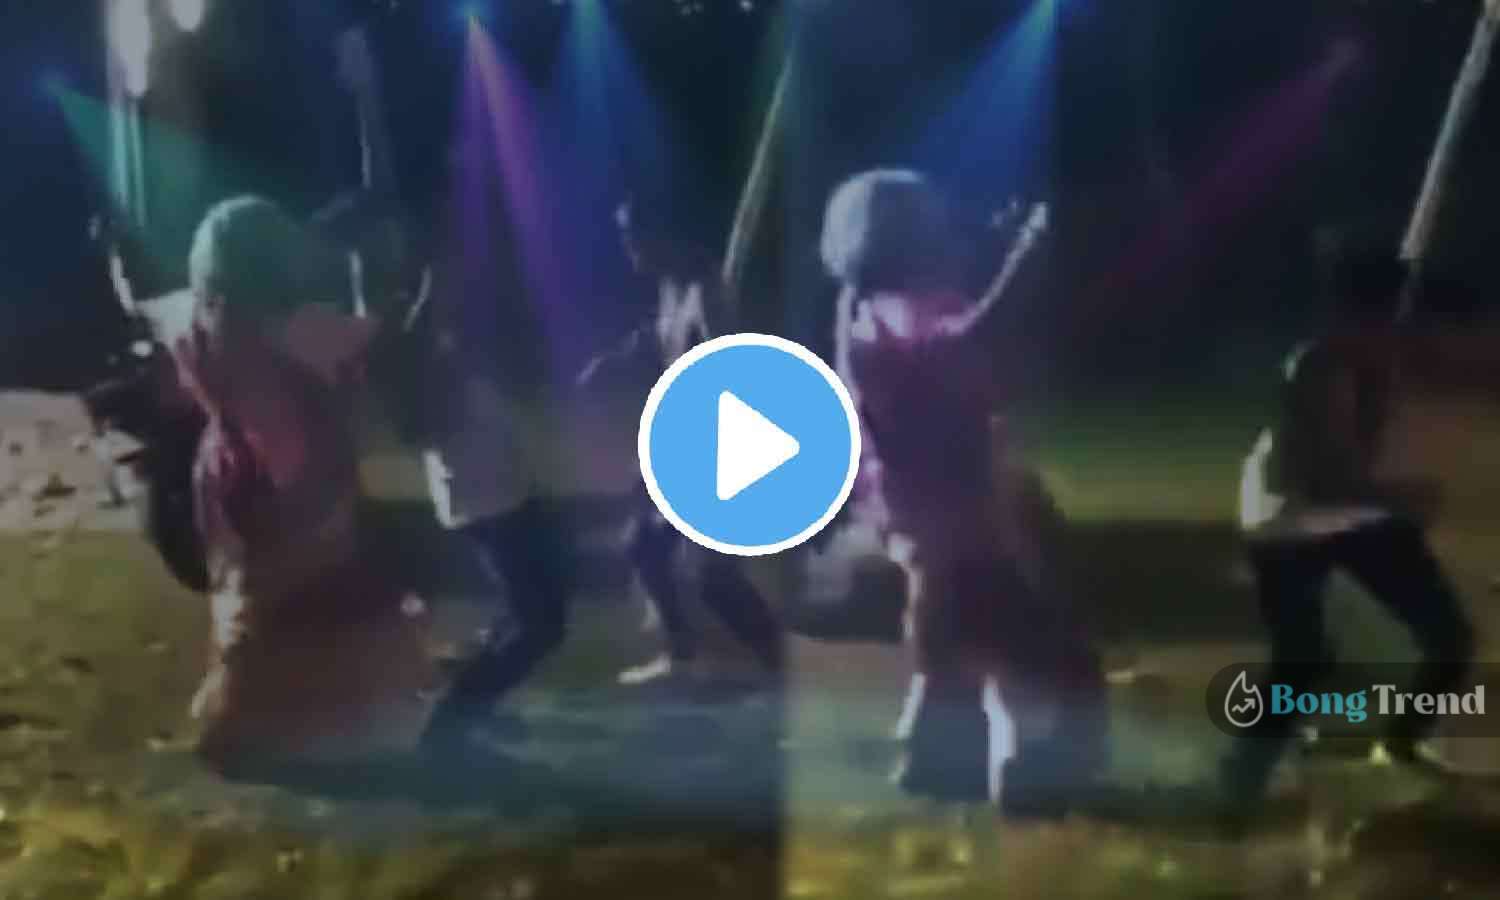 Old Woman Dancing on Le photo le song viral video ভাইরাল ভিডিও ঠাকুমার নাচ